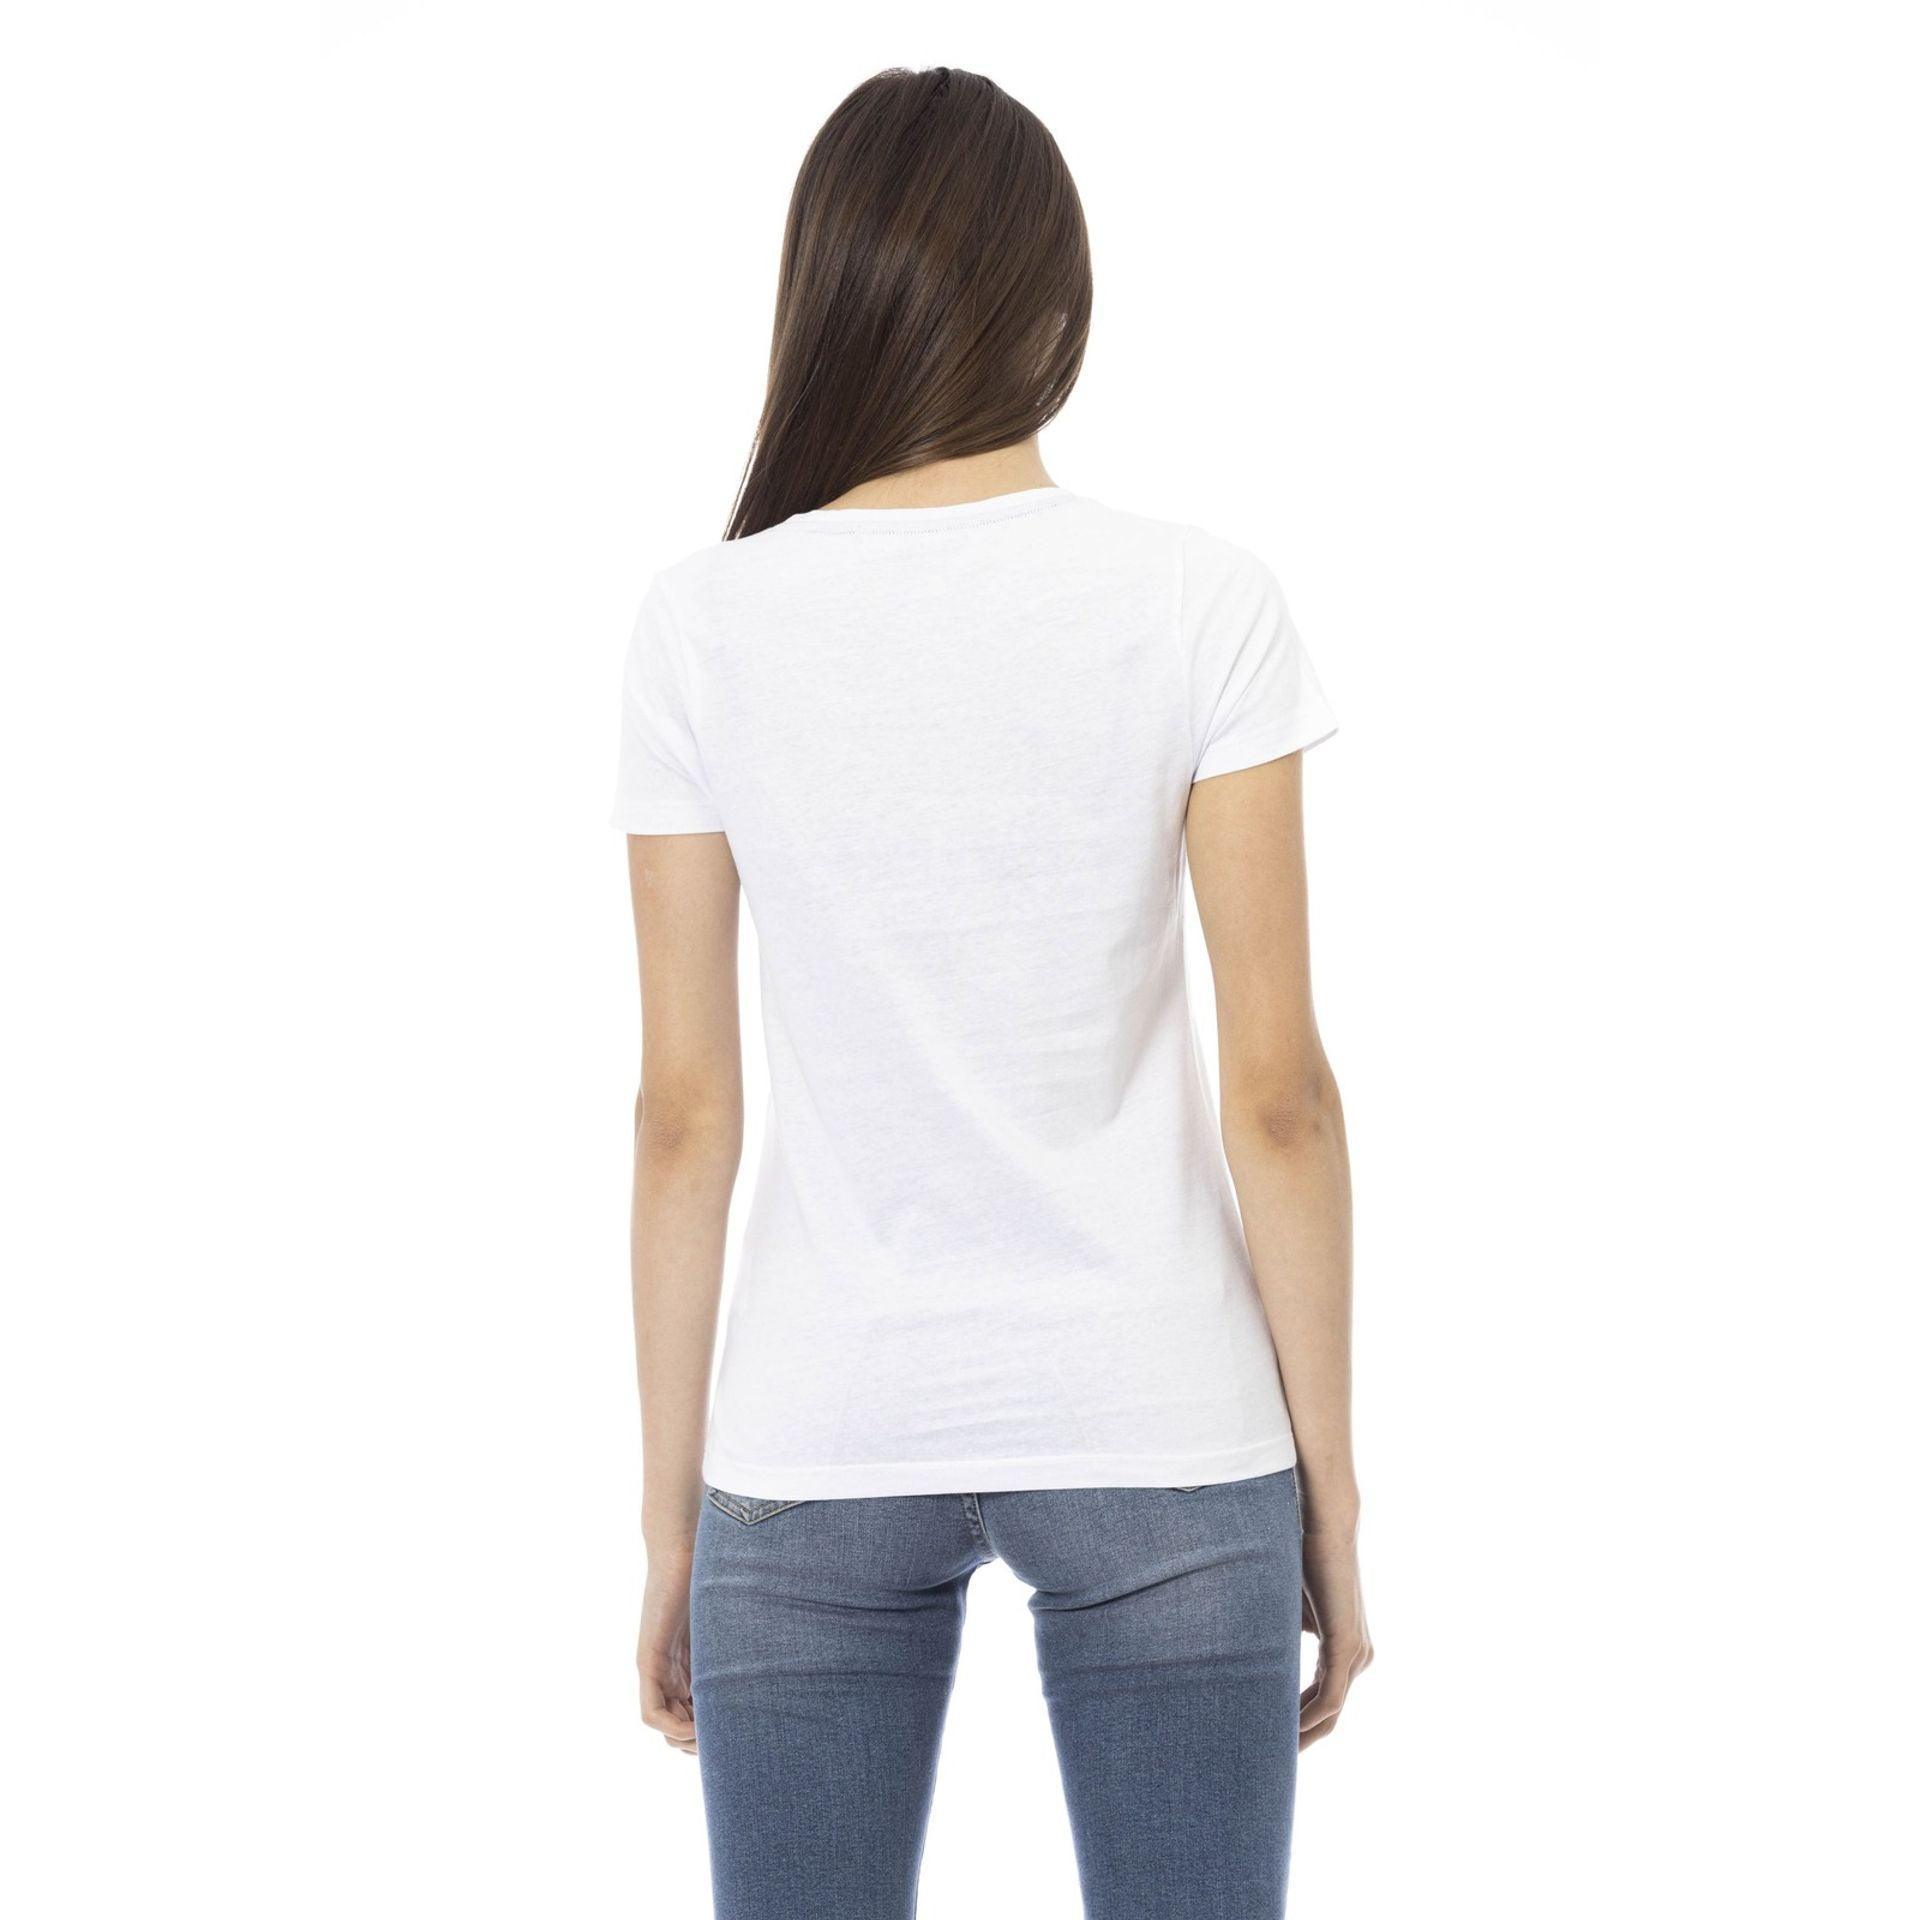 Trussardi Action Women T-Shirts - White Brand T-shirts - T-Shirt - Guocali